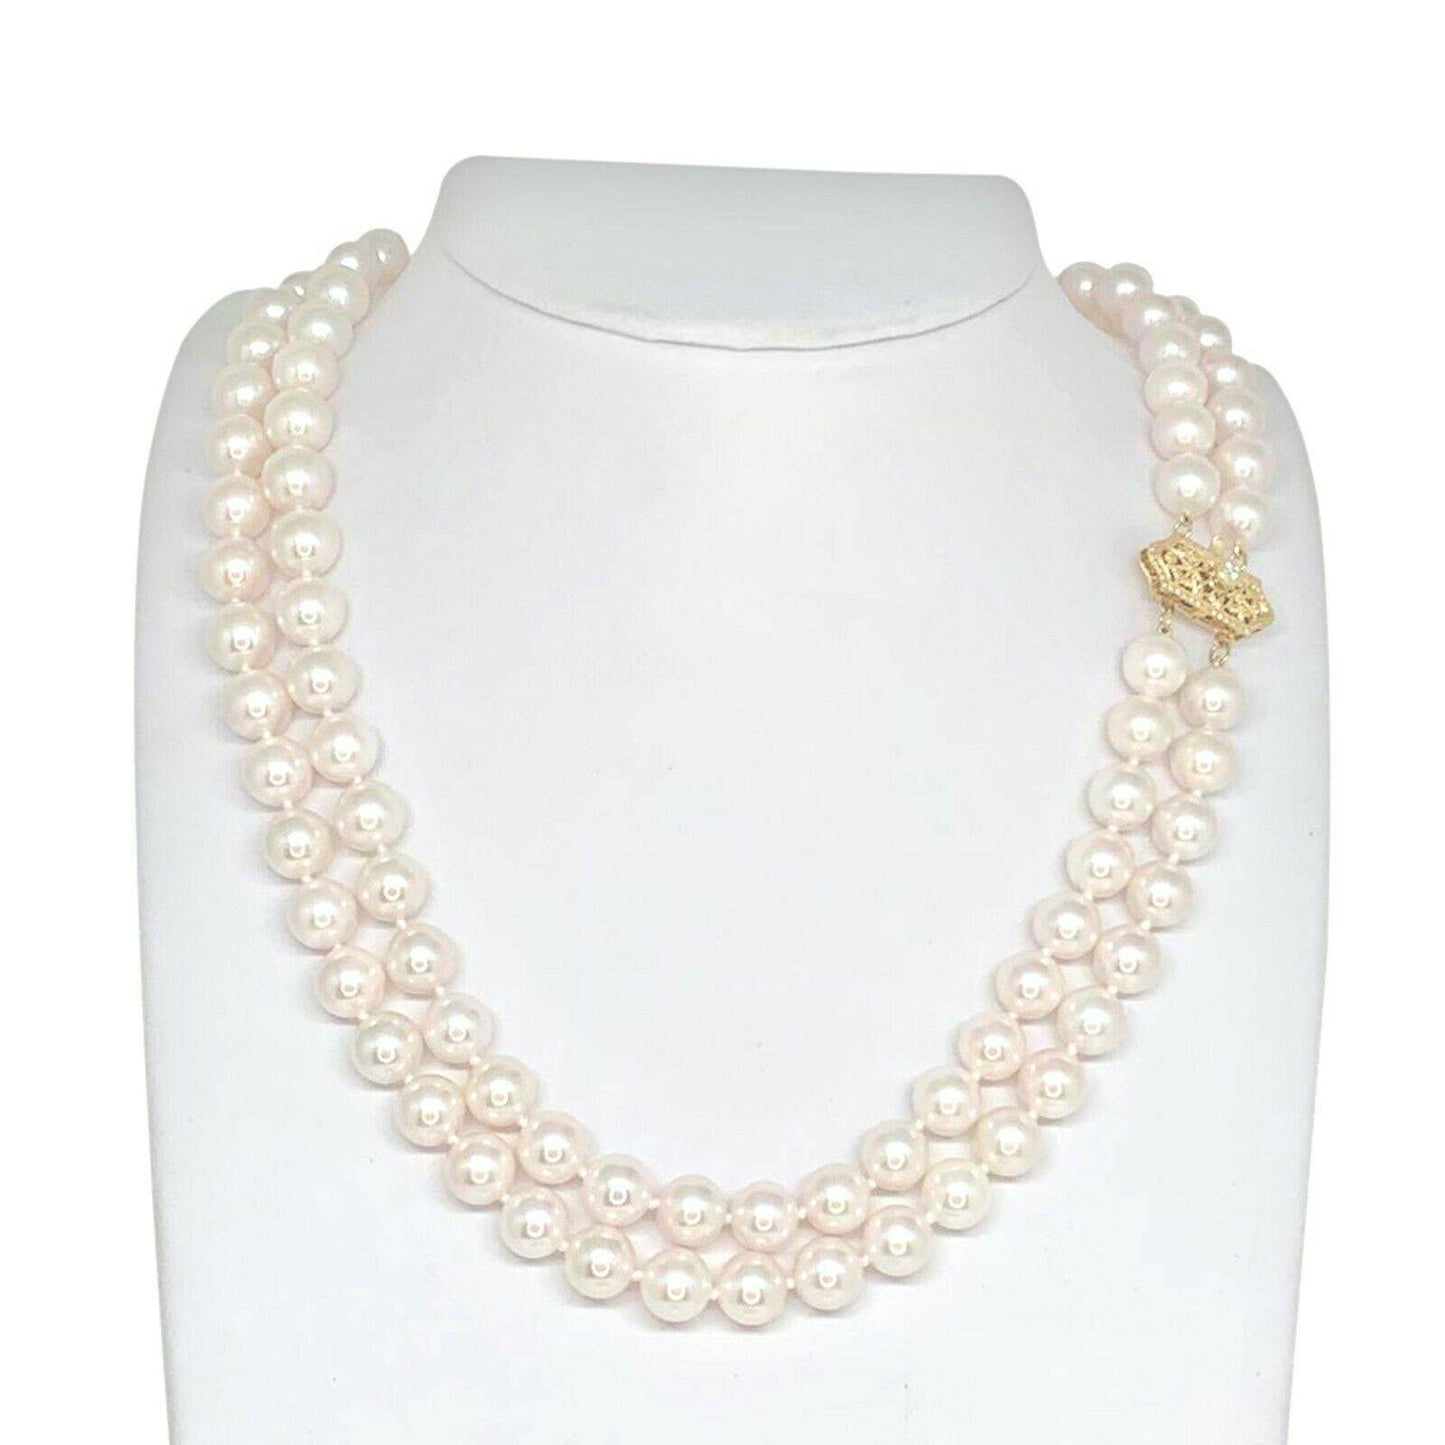 Diamond Akoya Pearl Necklace 8 mm 14k Gold 17 in 2-Strand Certified $9,750 010933 - Certified Estate Jewelry